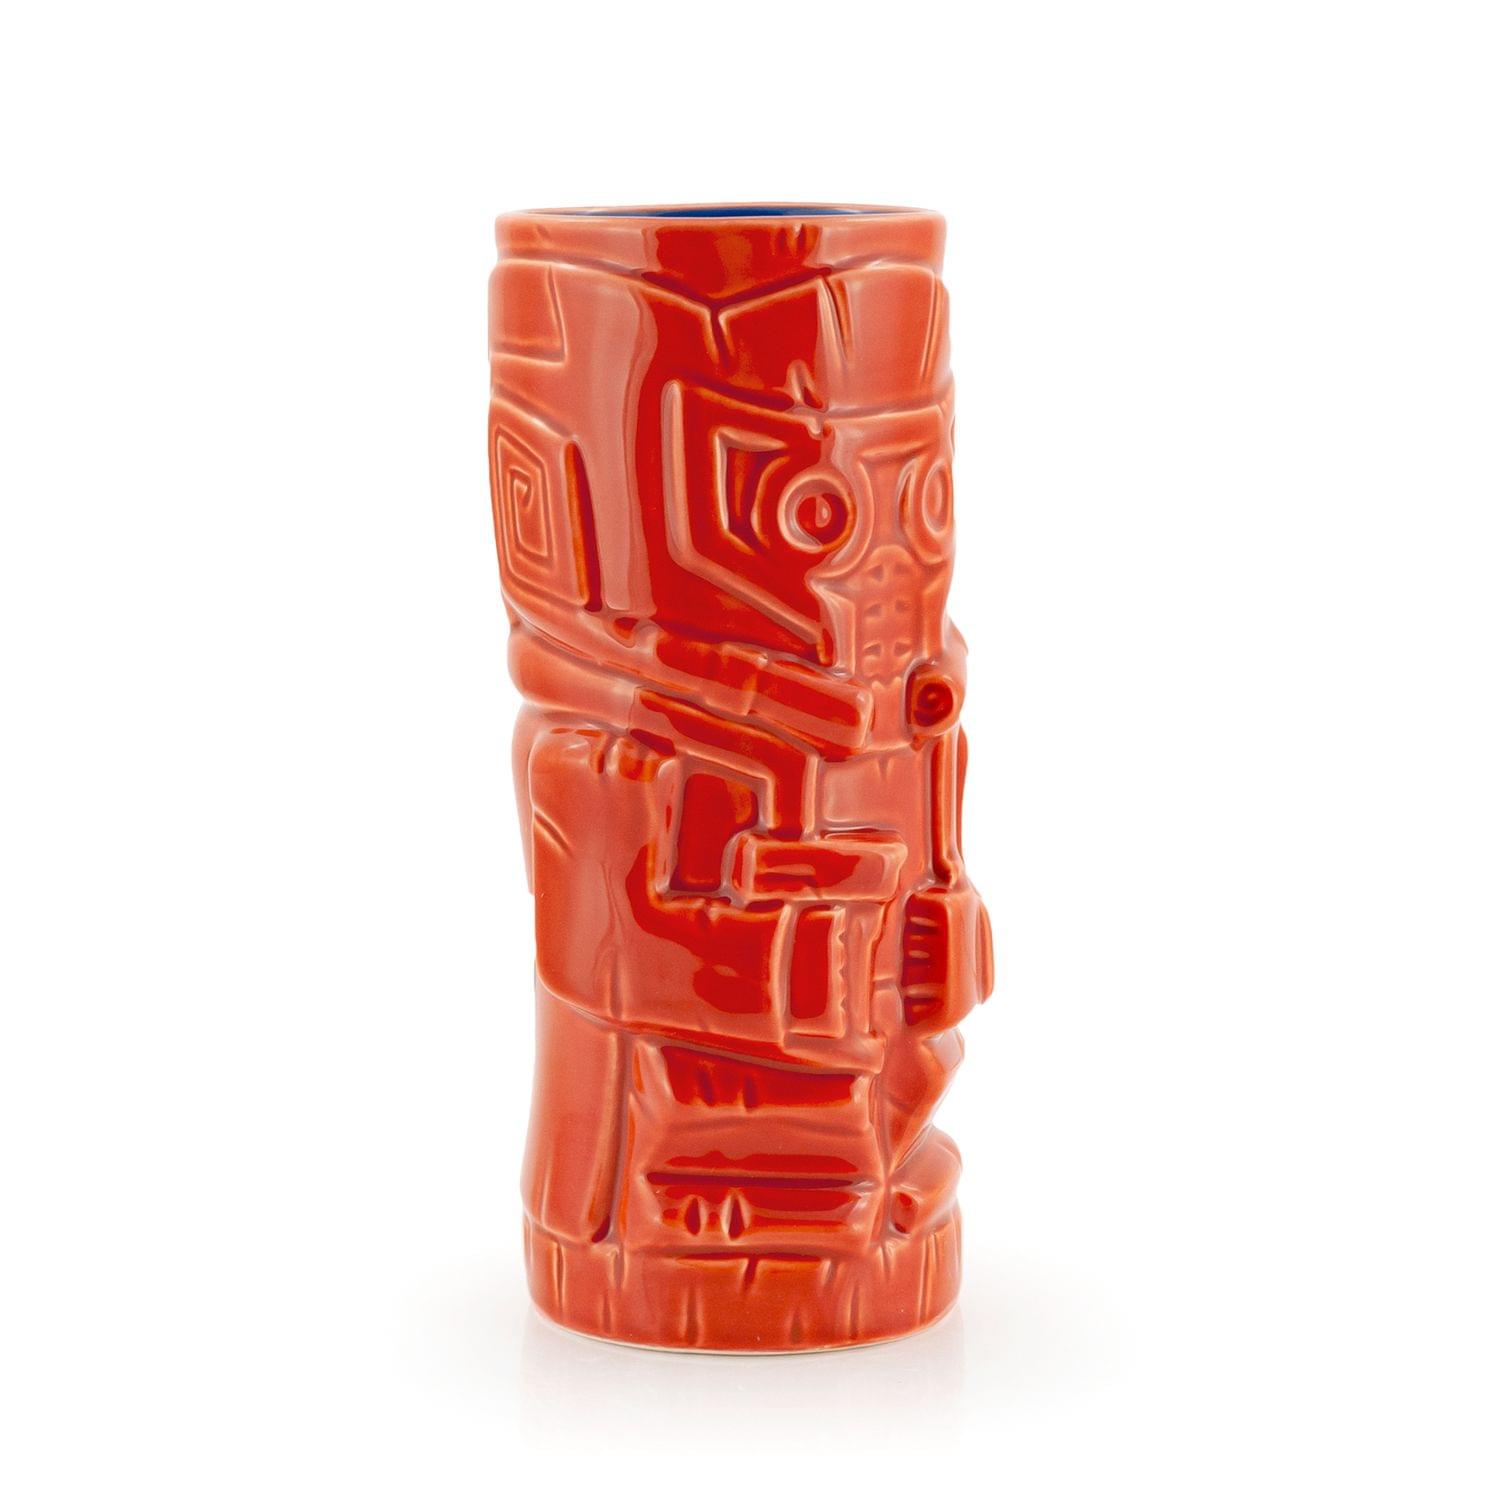 Geeki Tikis Guardians Of The Galaxy Star-Lord Ceramic Mug | Holds 14 Ounces